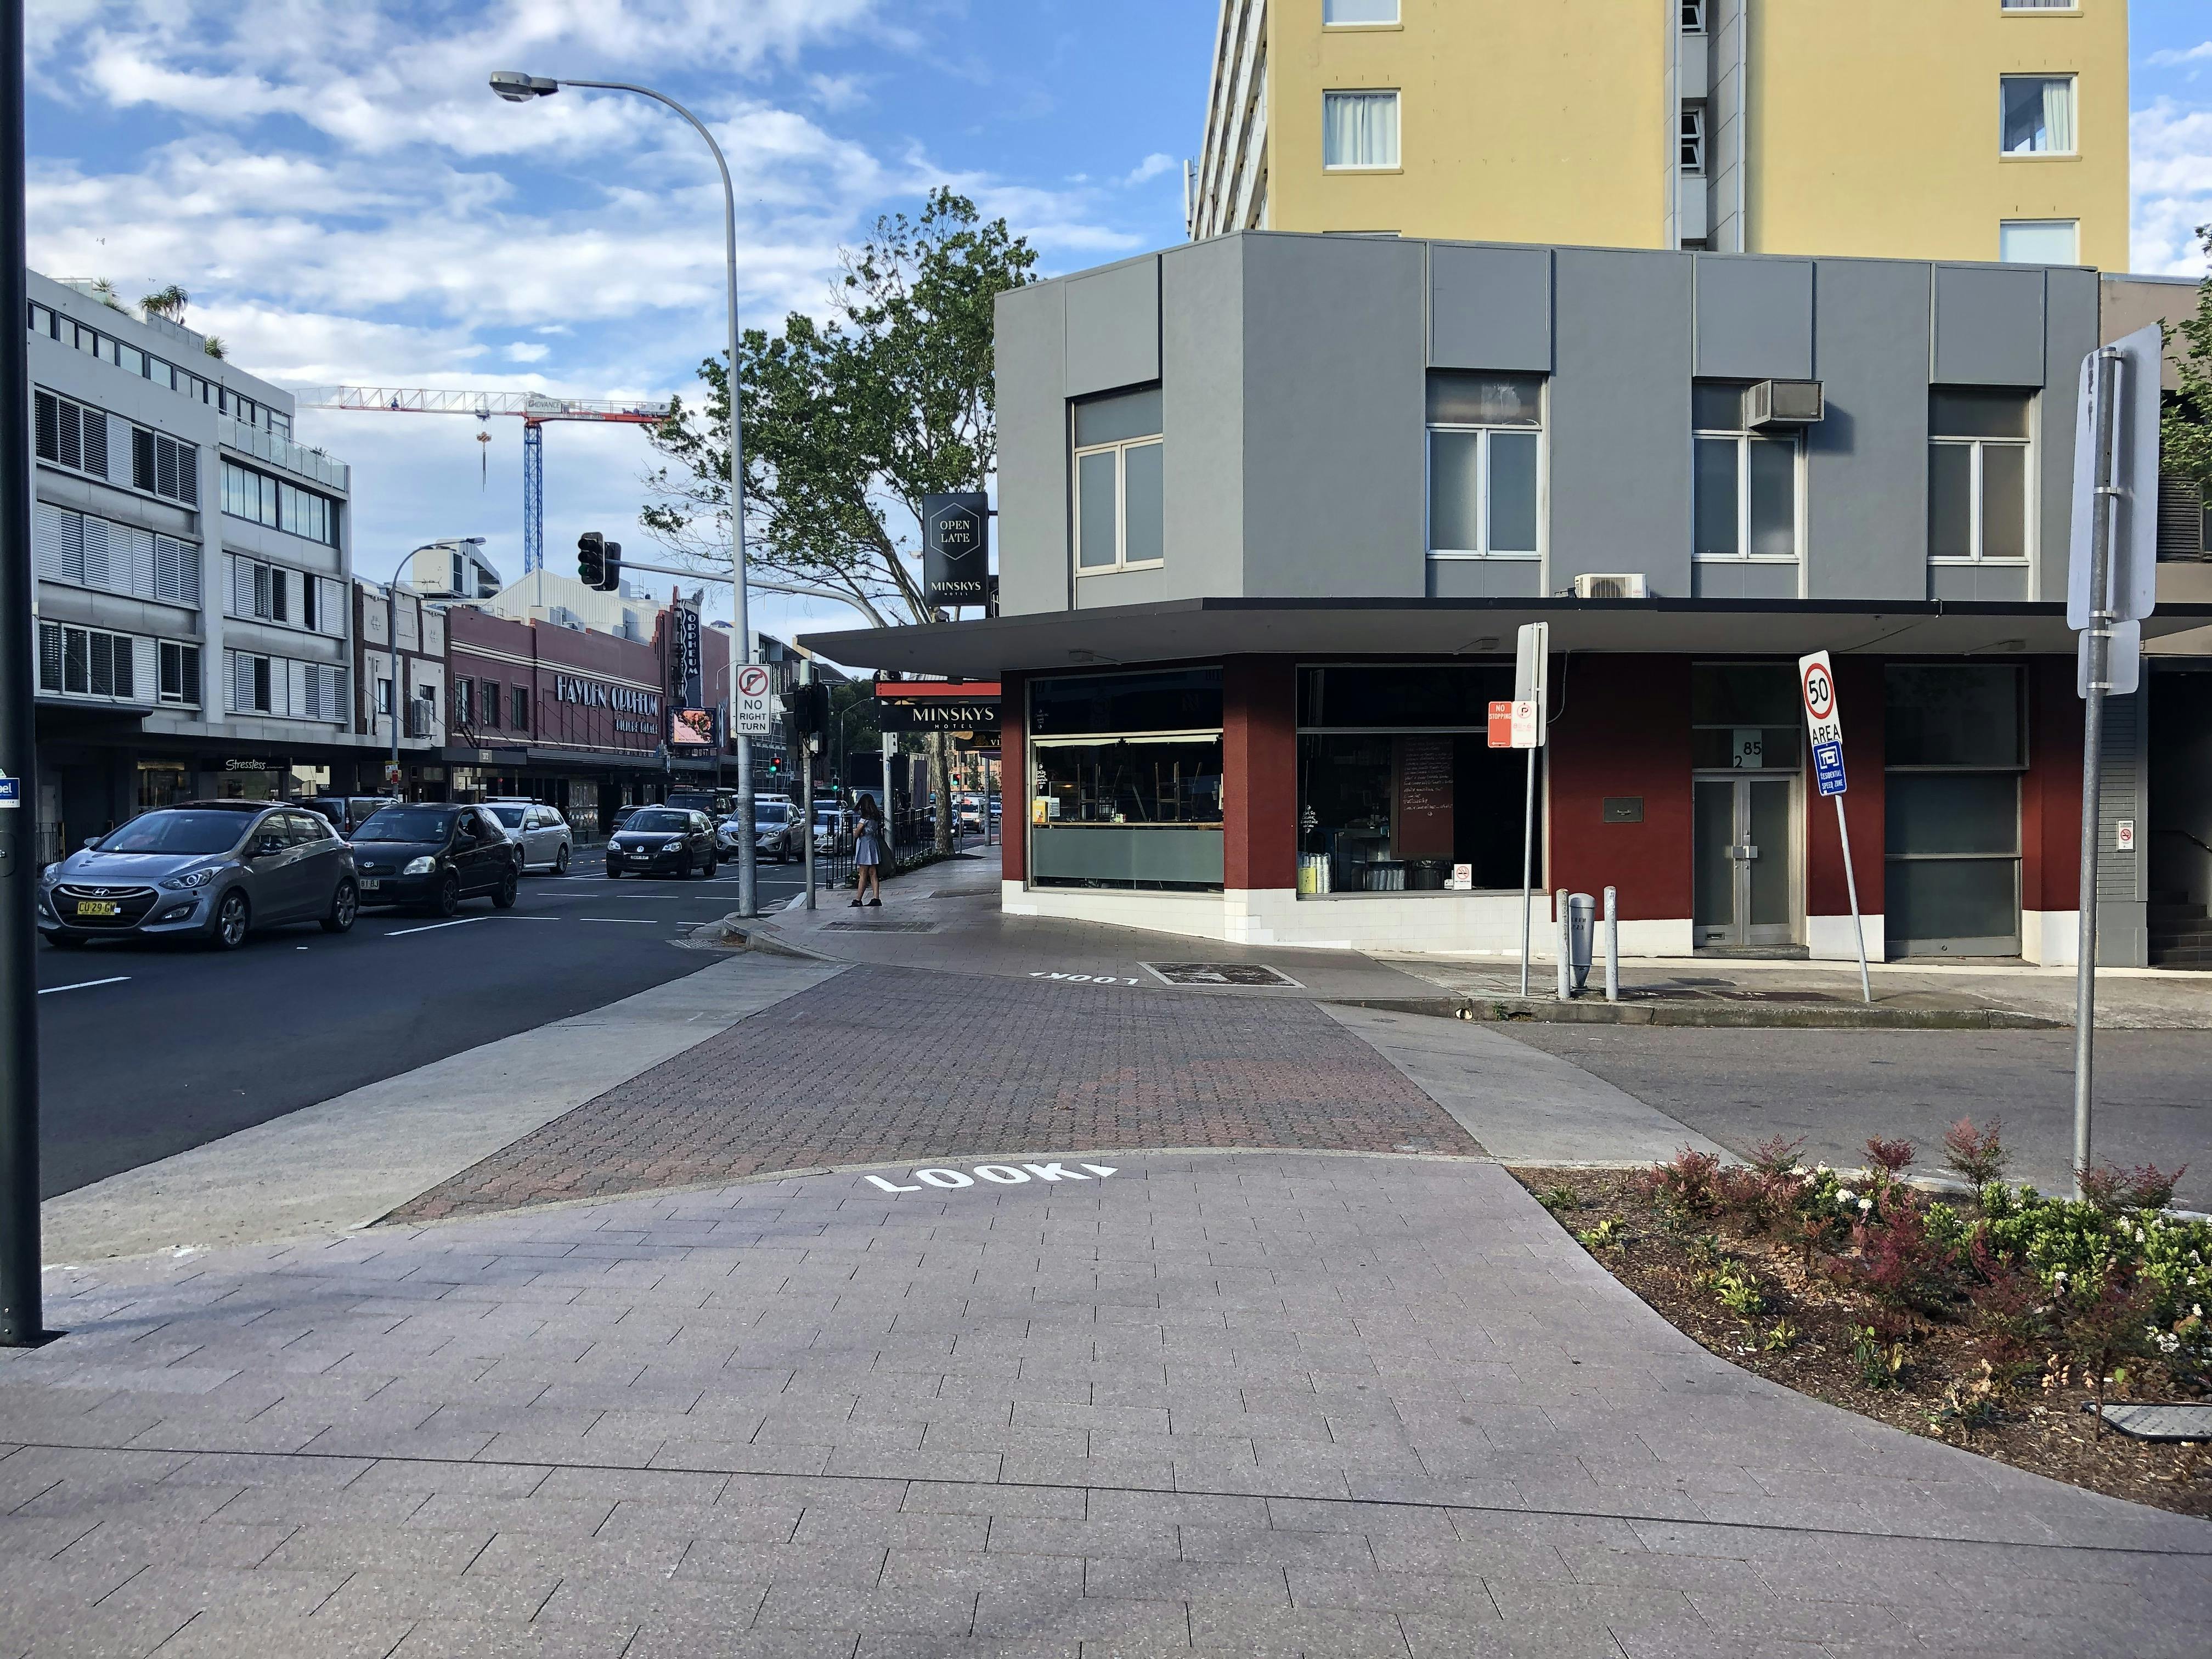 Cabramatta Road - Before improvement works